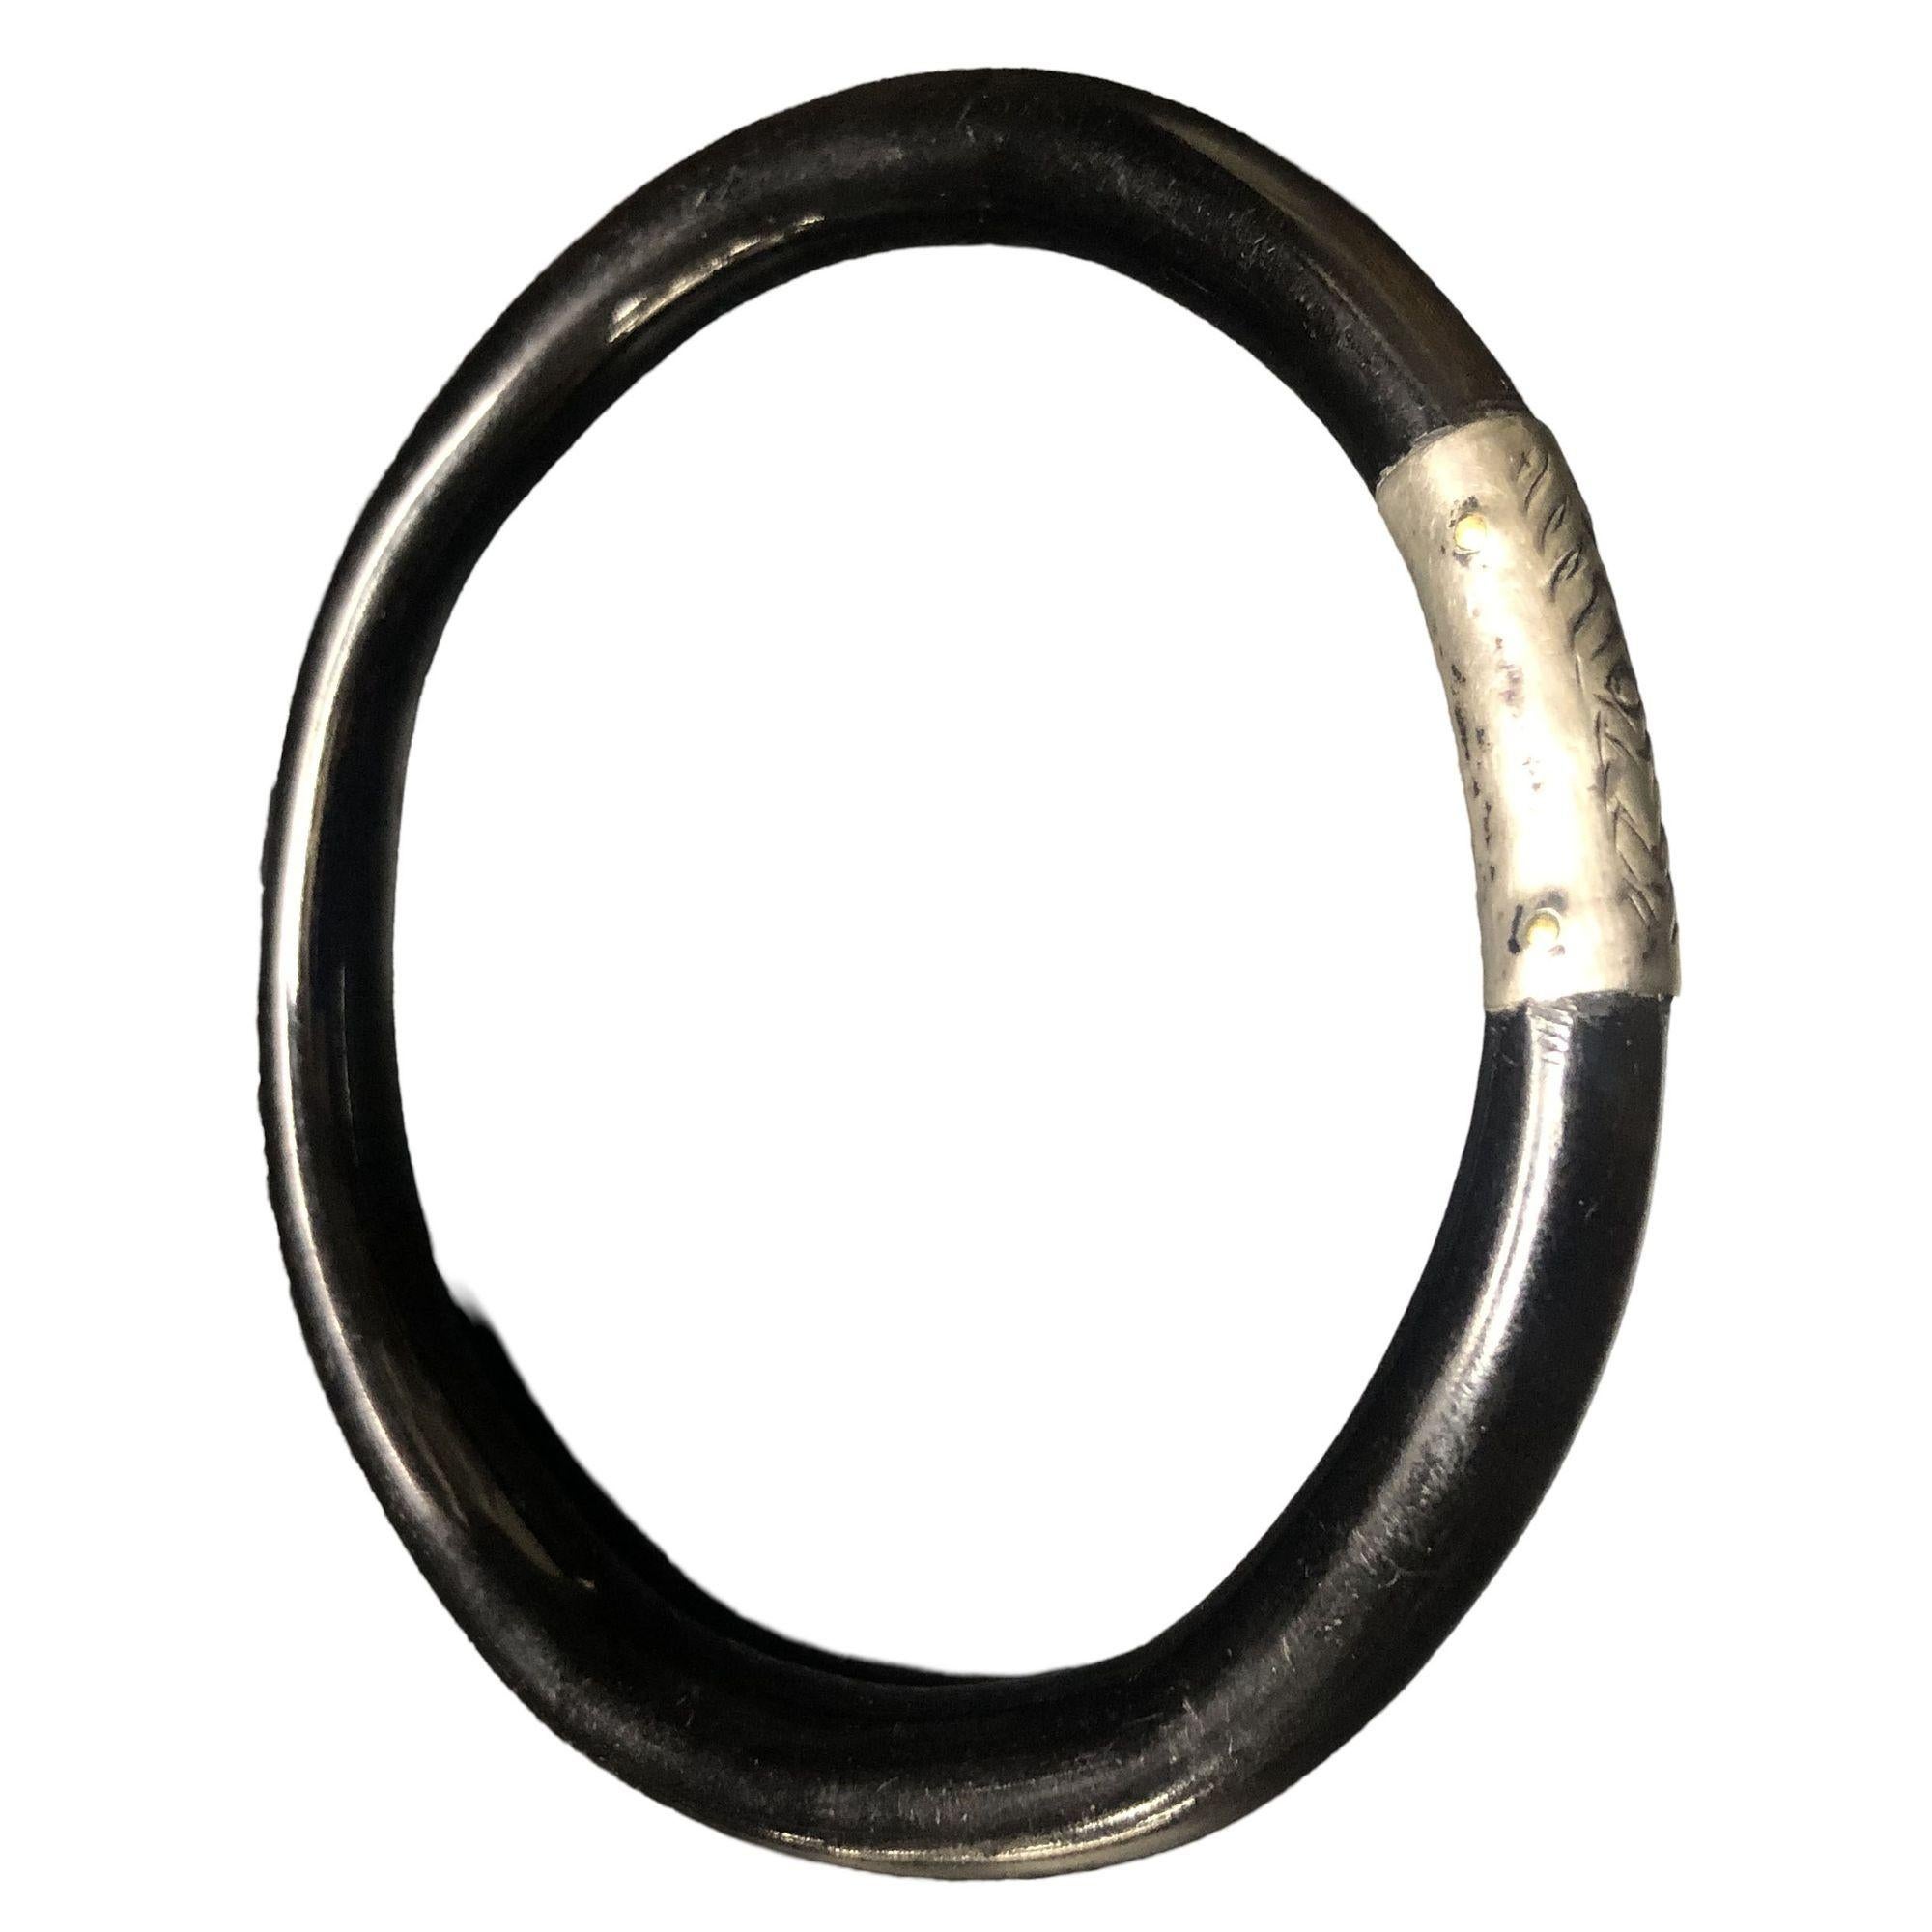 Bracelet en bakélite noire avec ornementation en argent sterling.

Mesures : 2 3/8